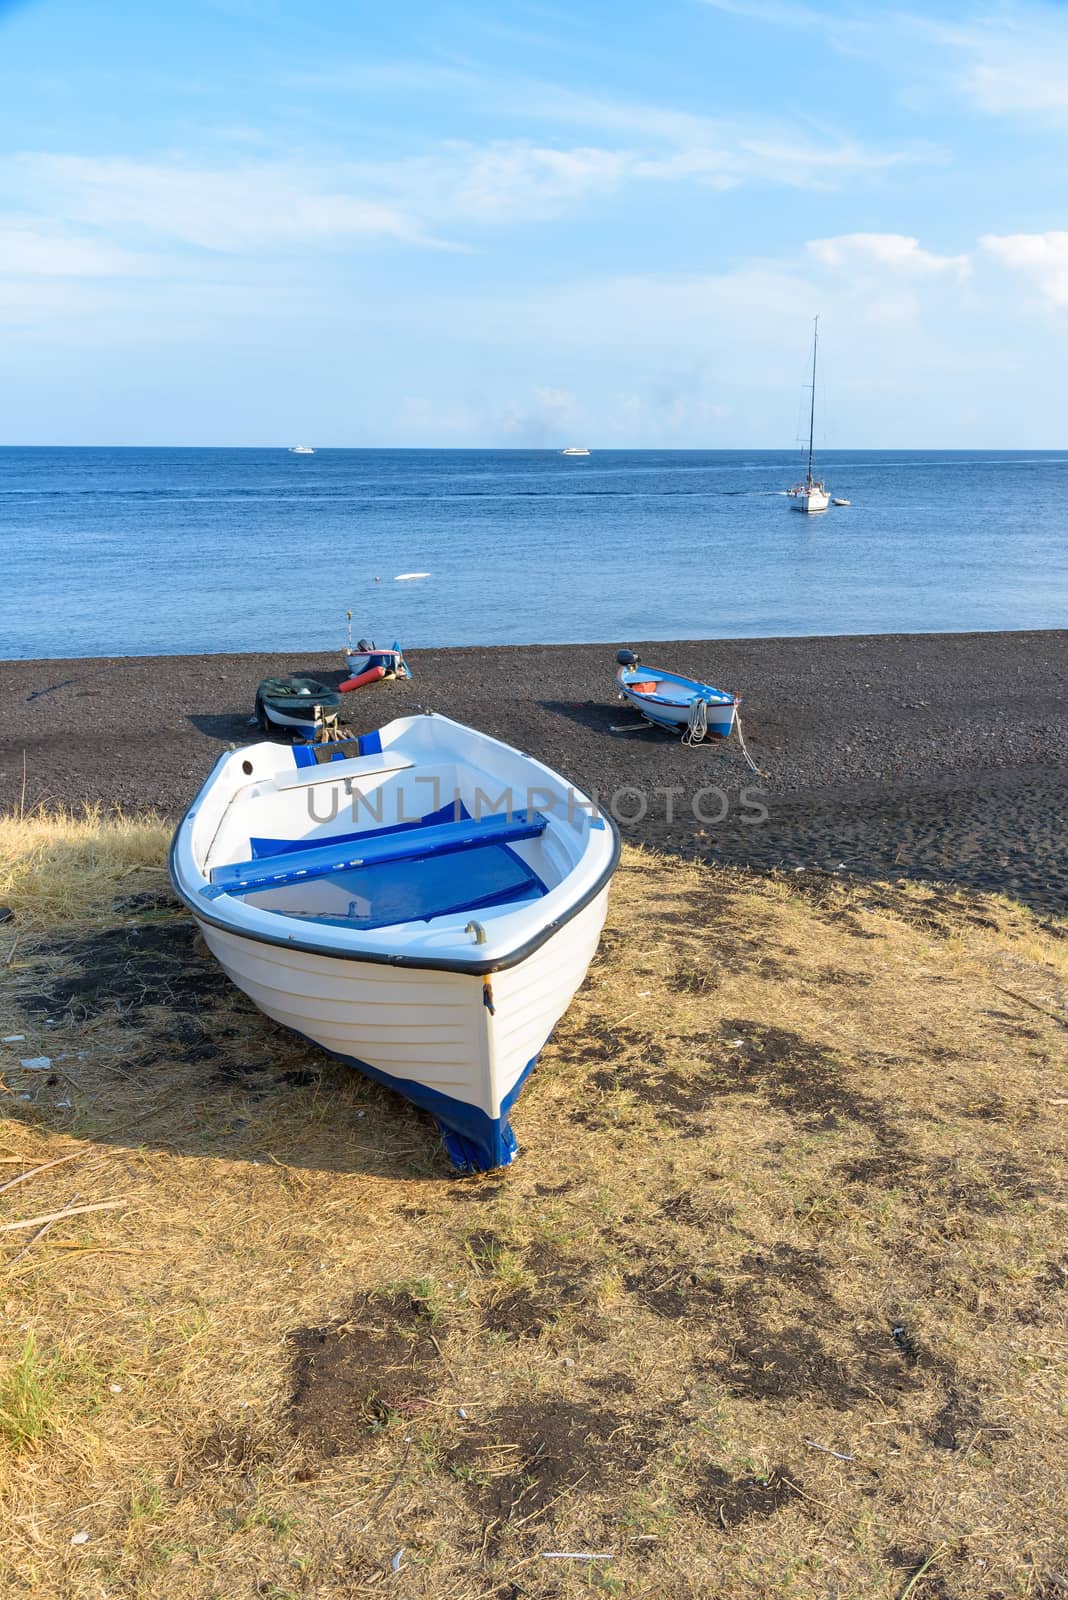 Boat on the black volcanic beach on Stromboli Island, Aeolian Islands, Italy